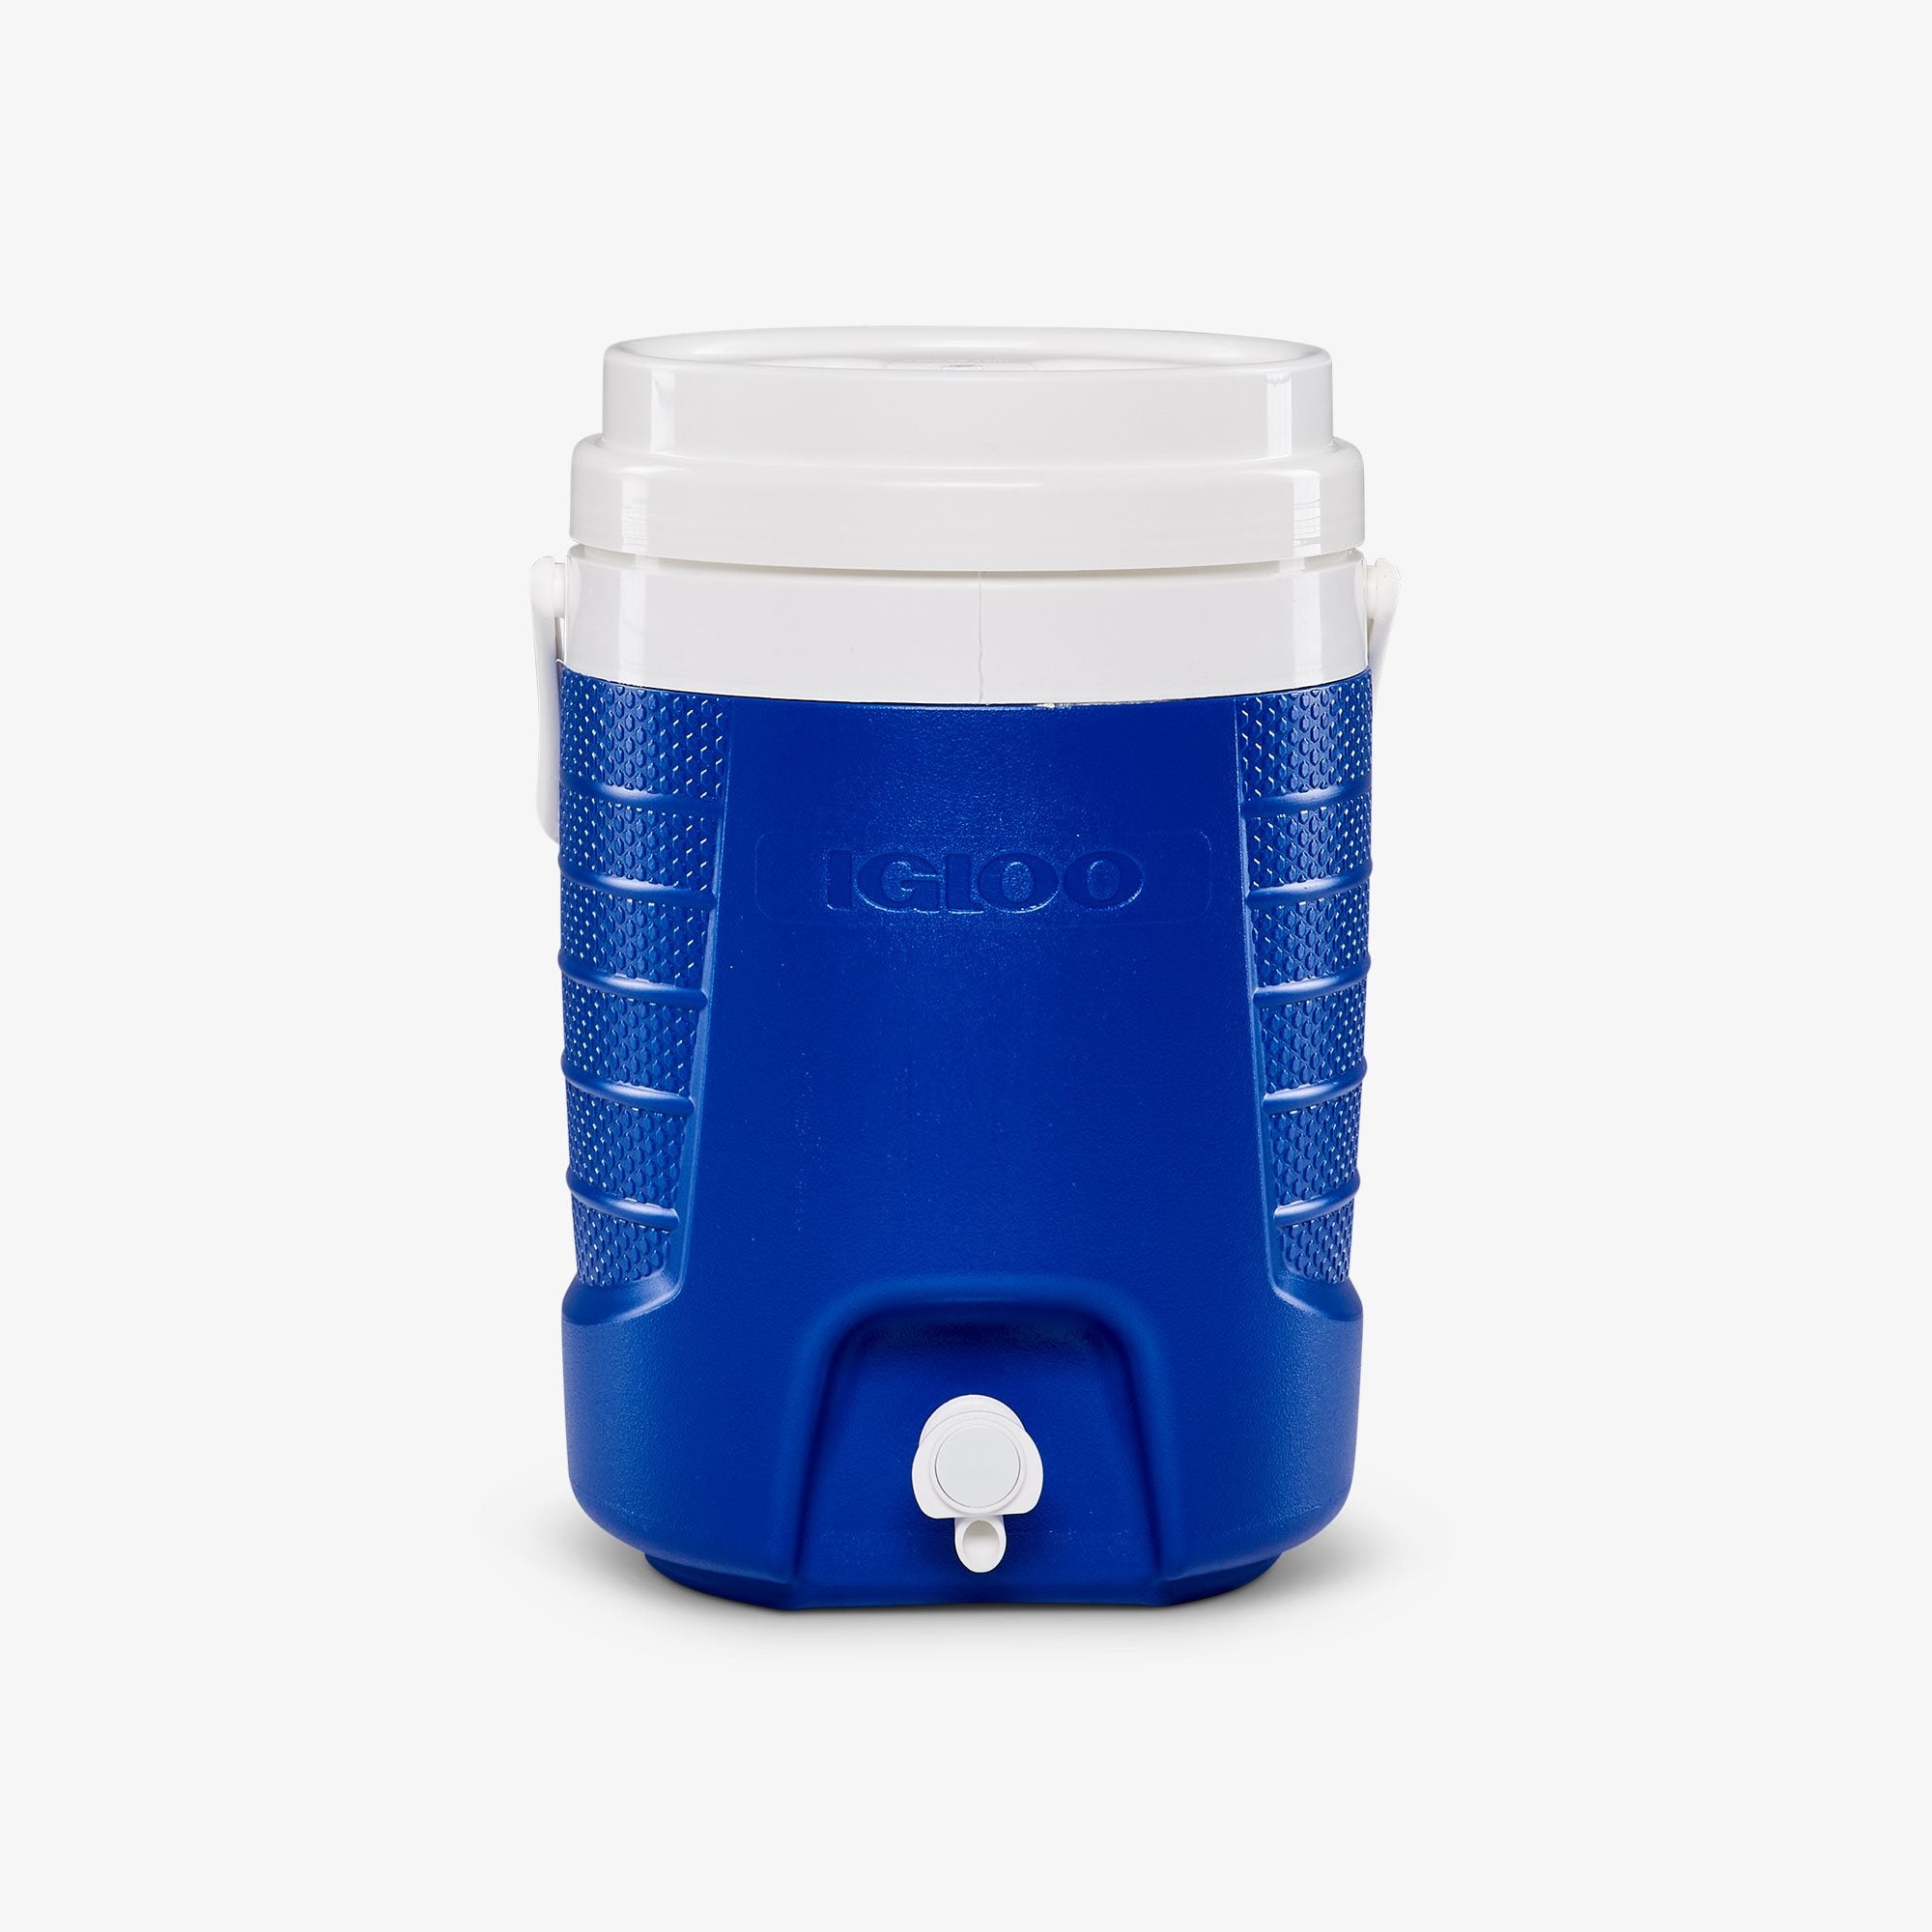 igloo quart water jug